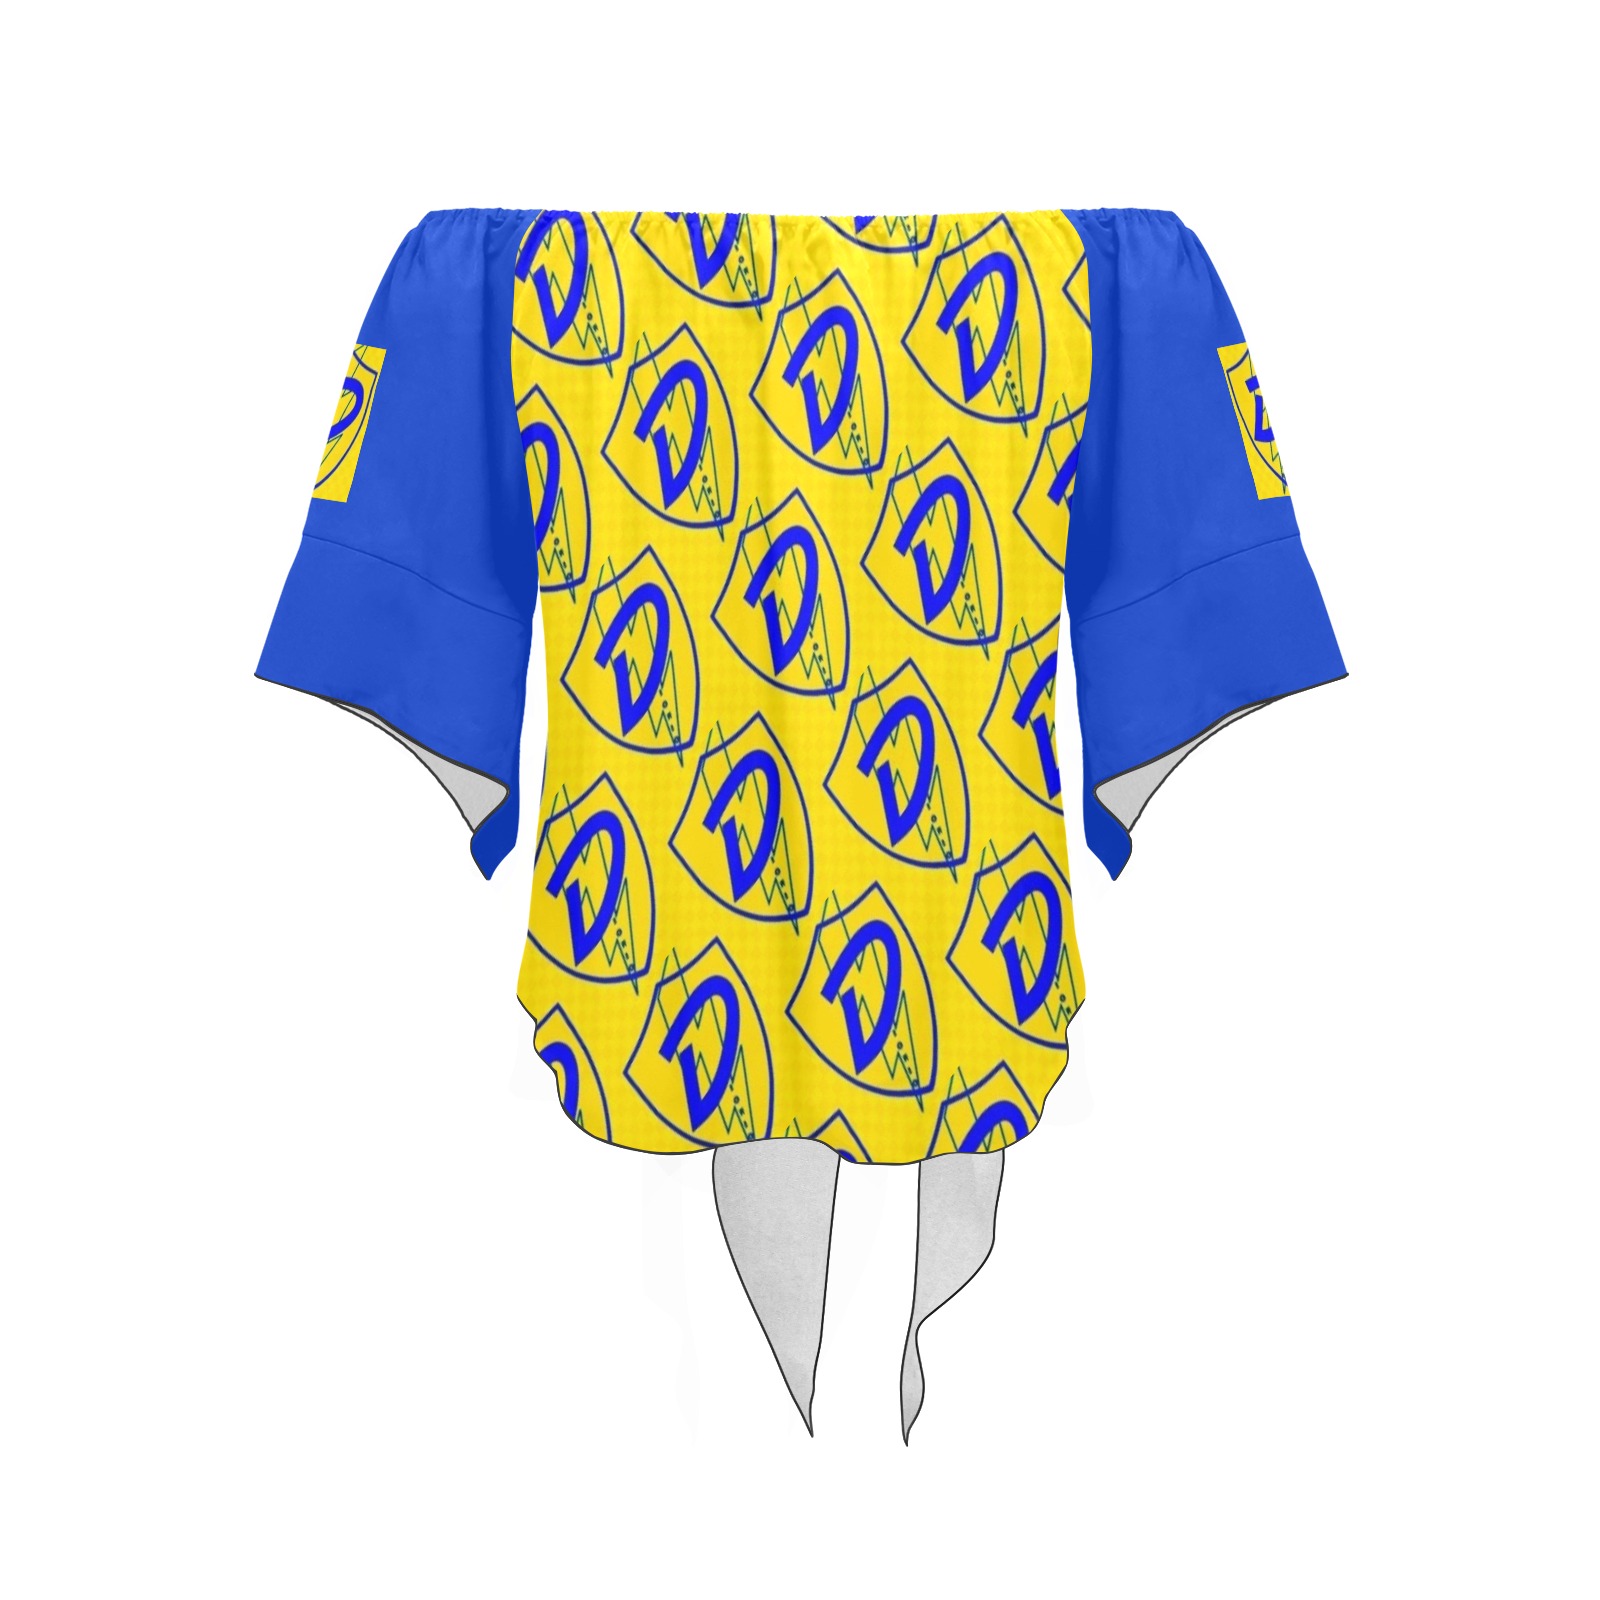 DIONIO Clothing - Women's Off Shoulder Knot Blouse (Blue Grand Prix Logo) Off Shoulder Knot Front Blouse (Model T71)